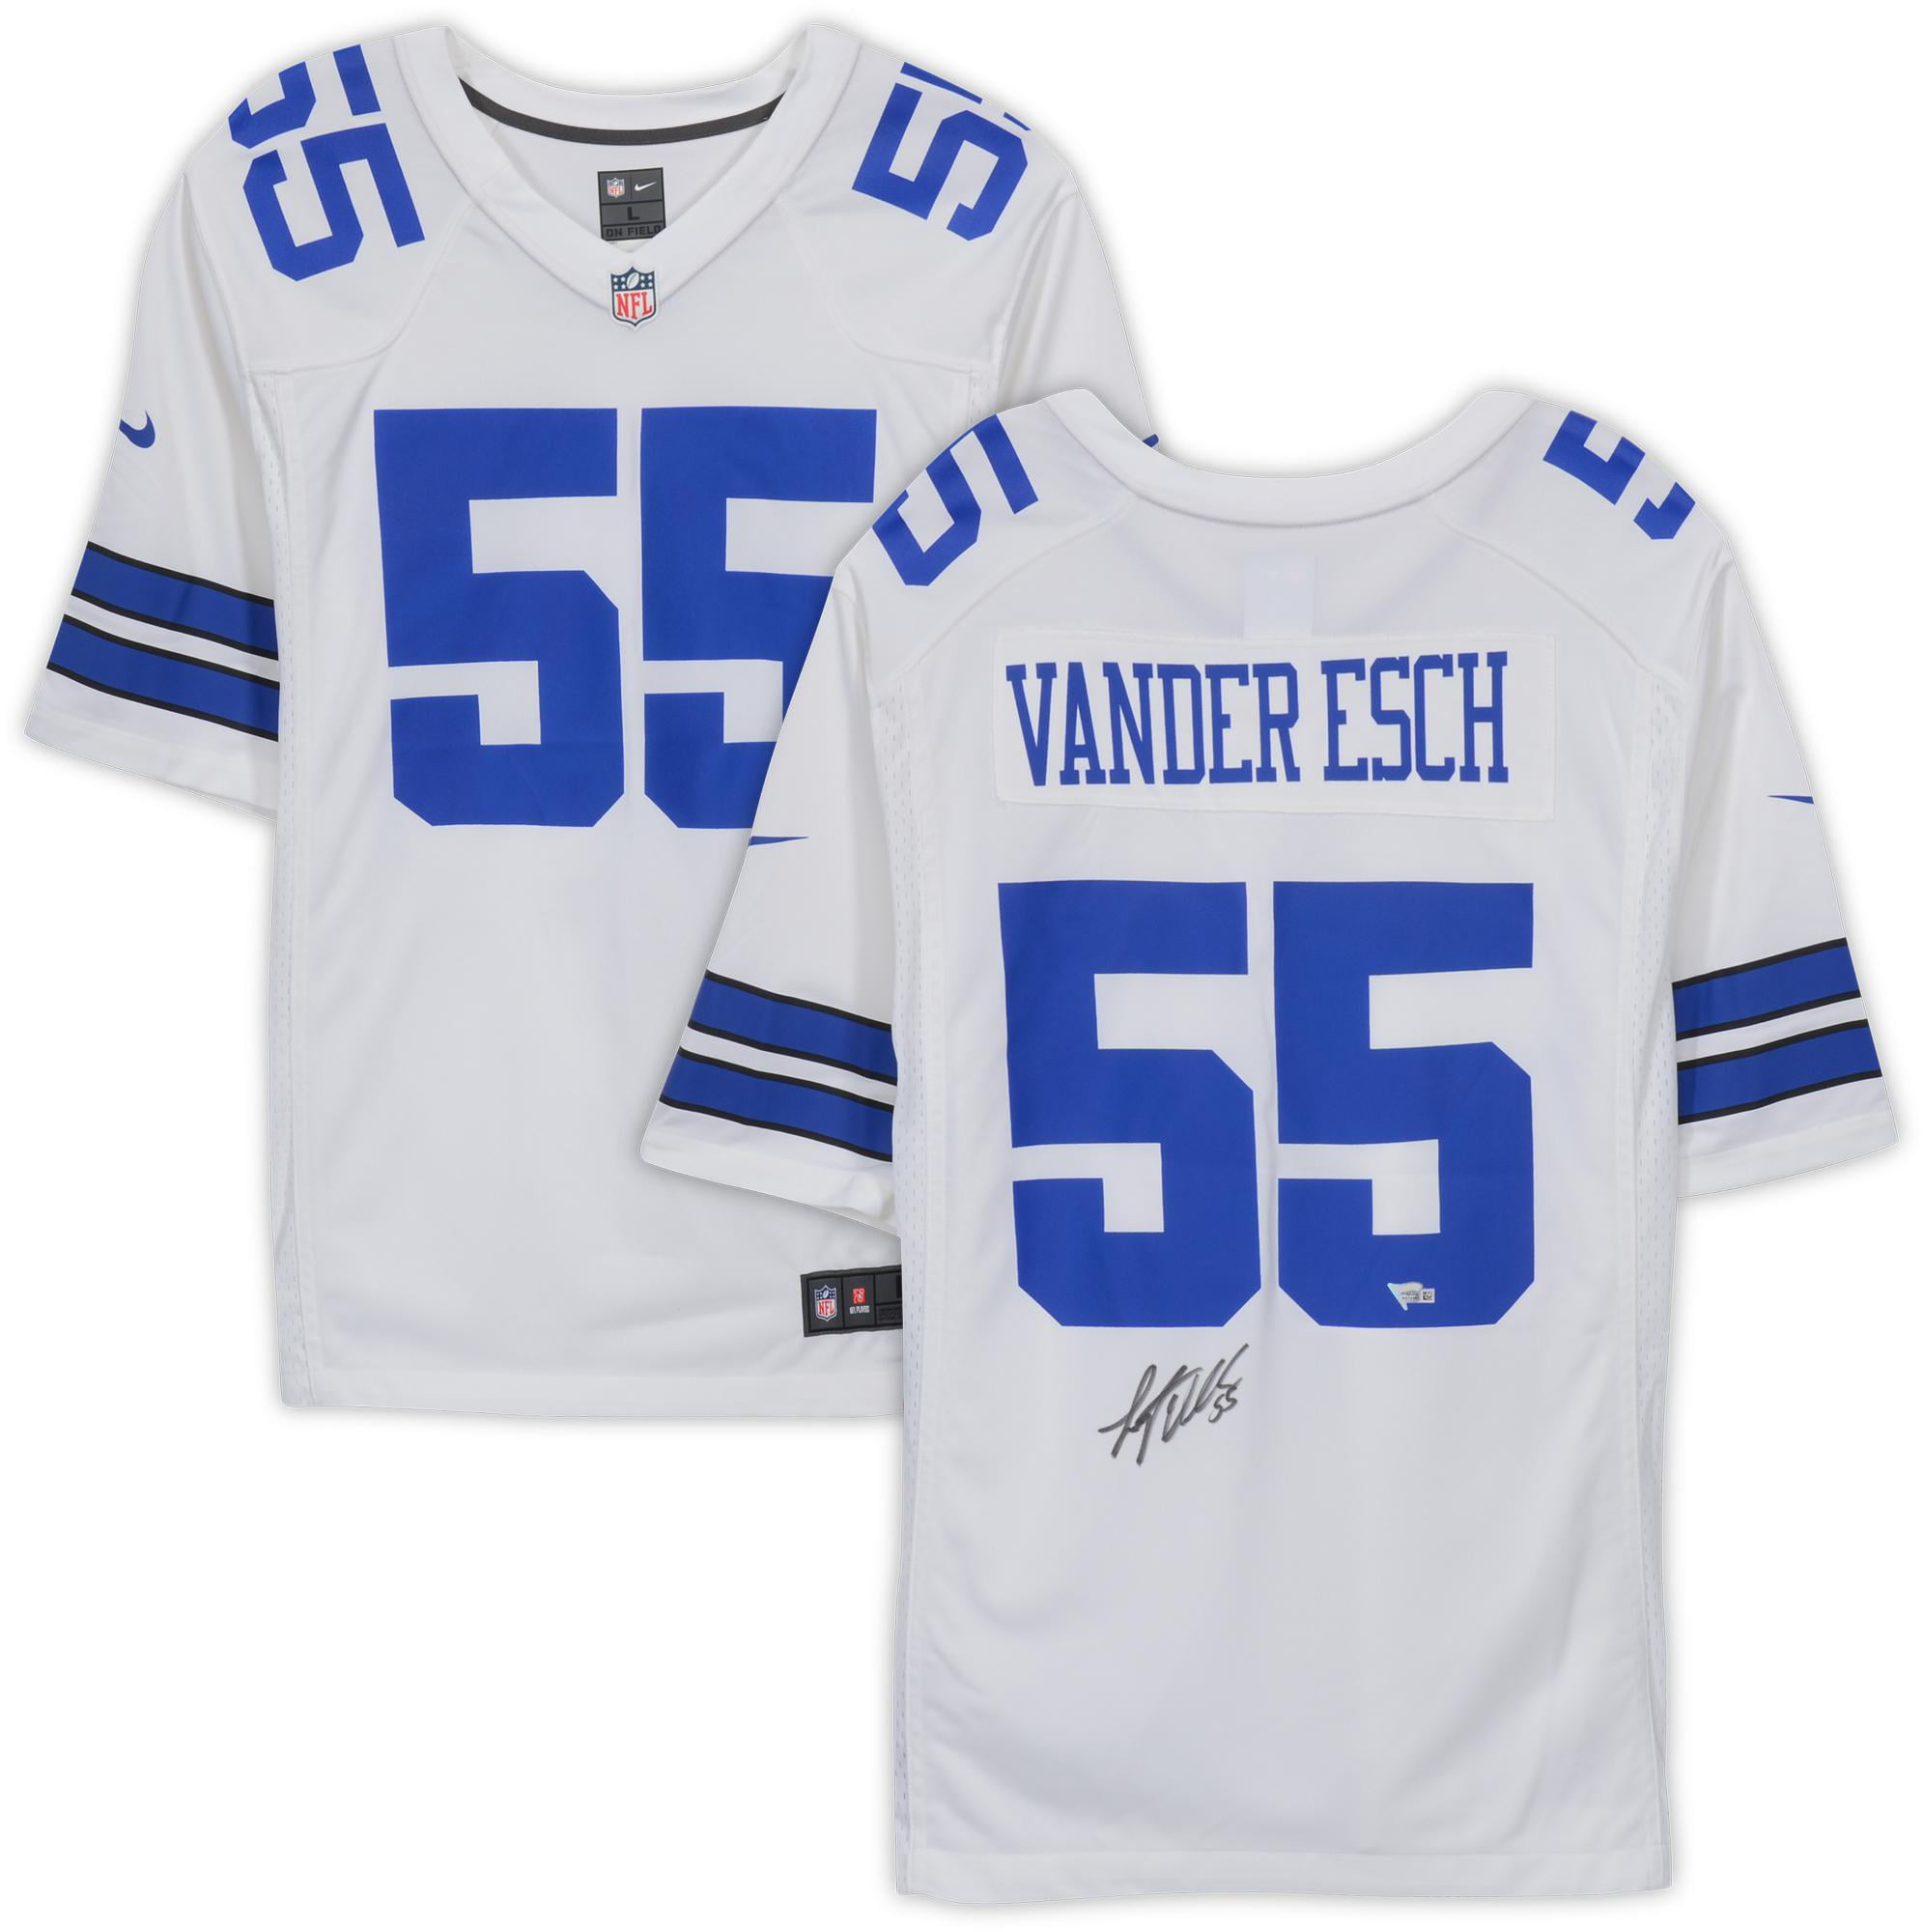 Leighton Vander Esch Dallas Cowboys Autographed White Game Jersey - Fanatics Authentic Certified - Walmart.com